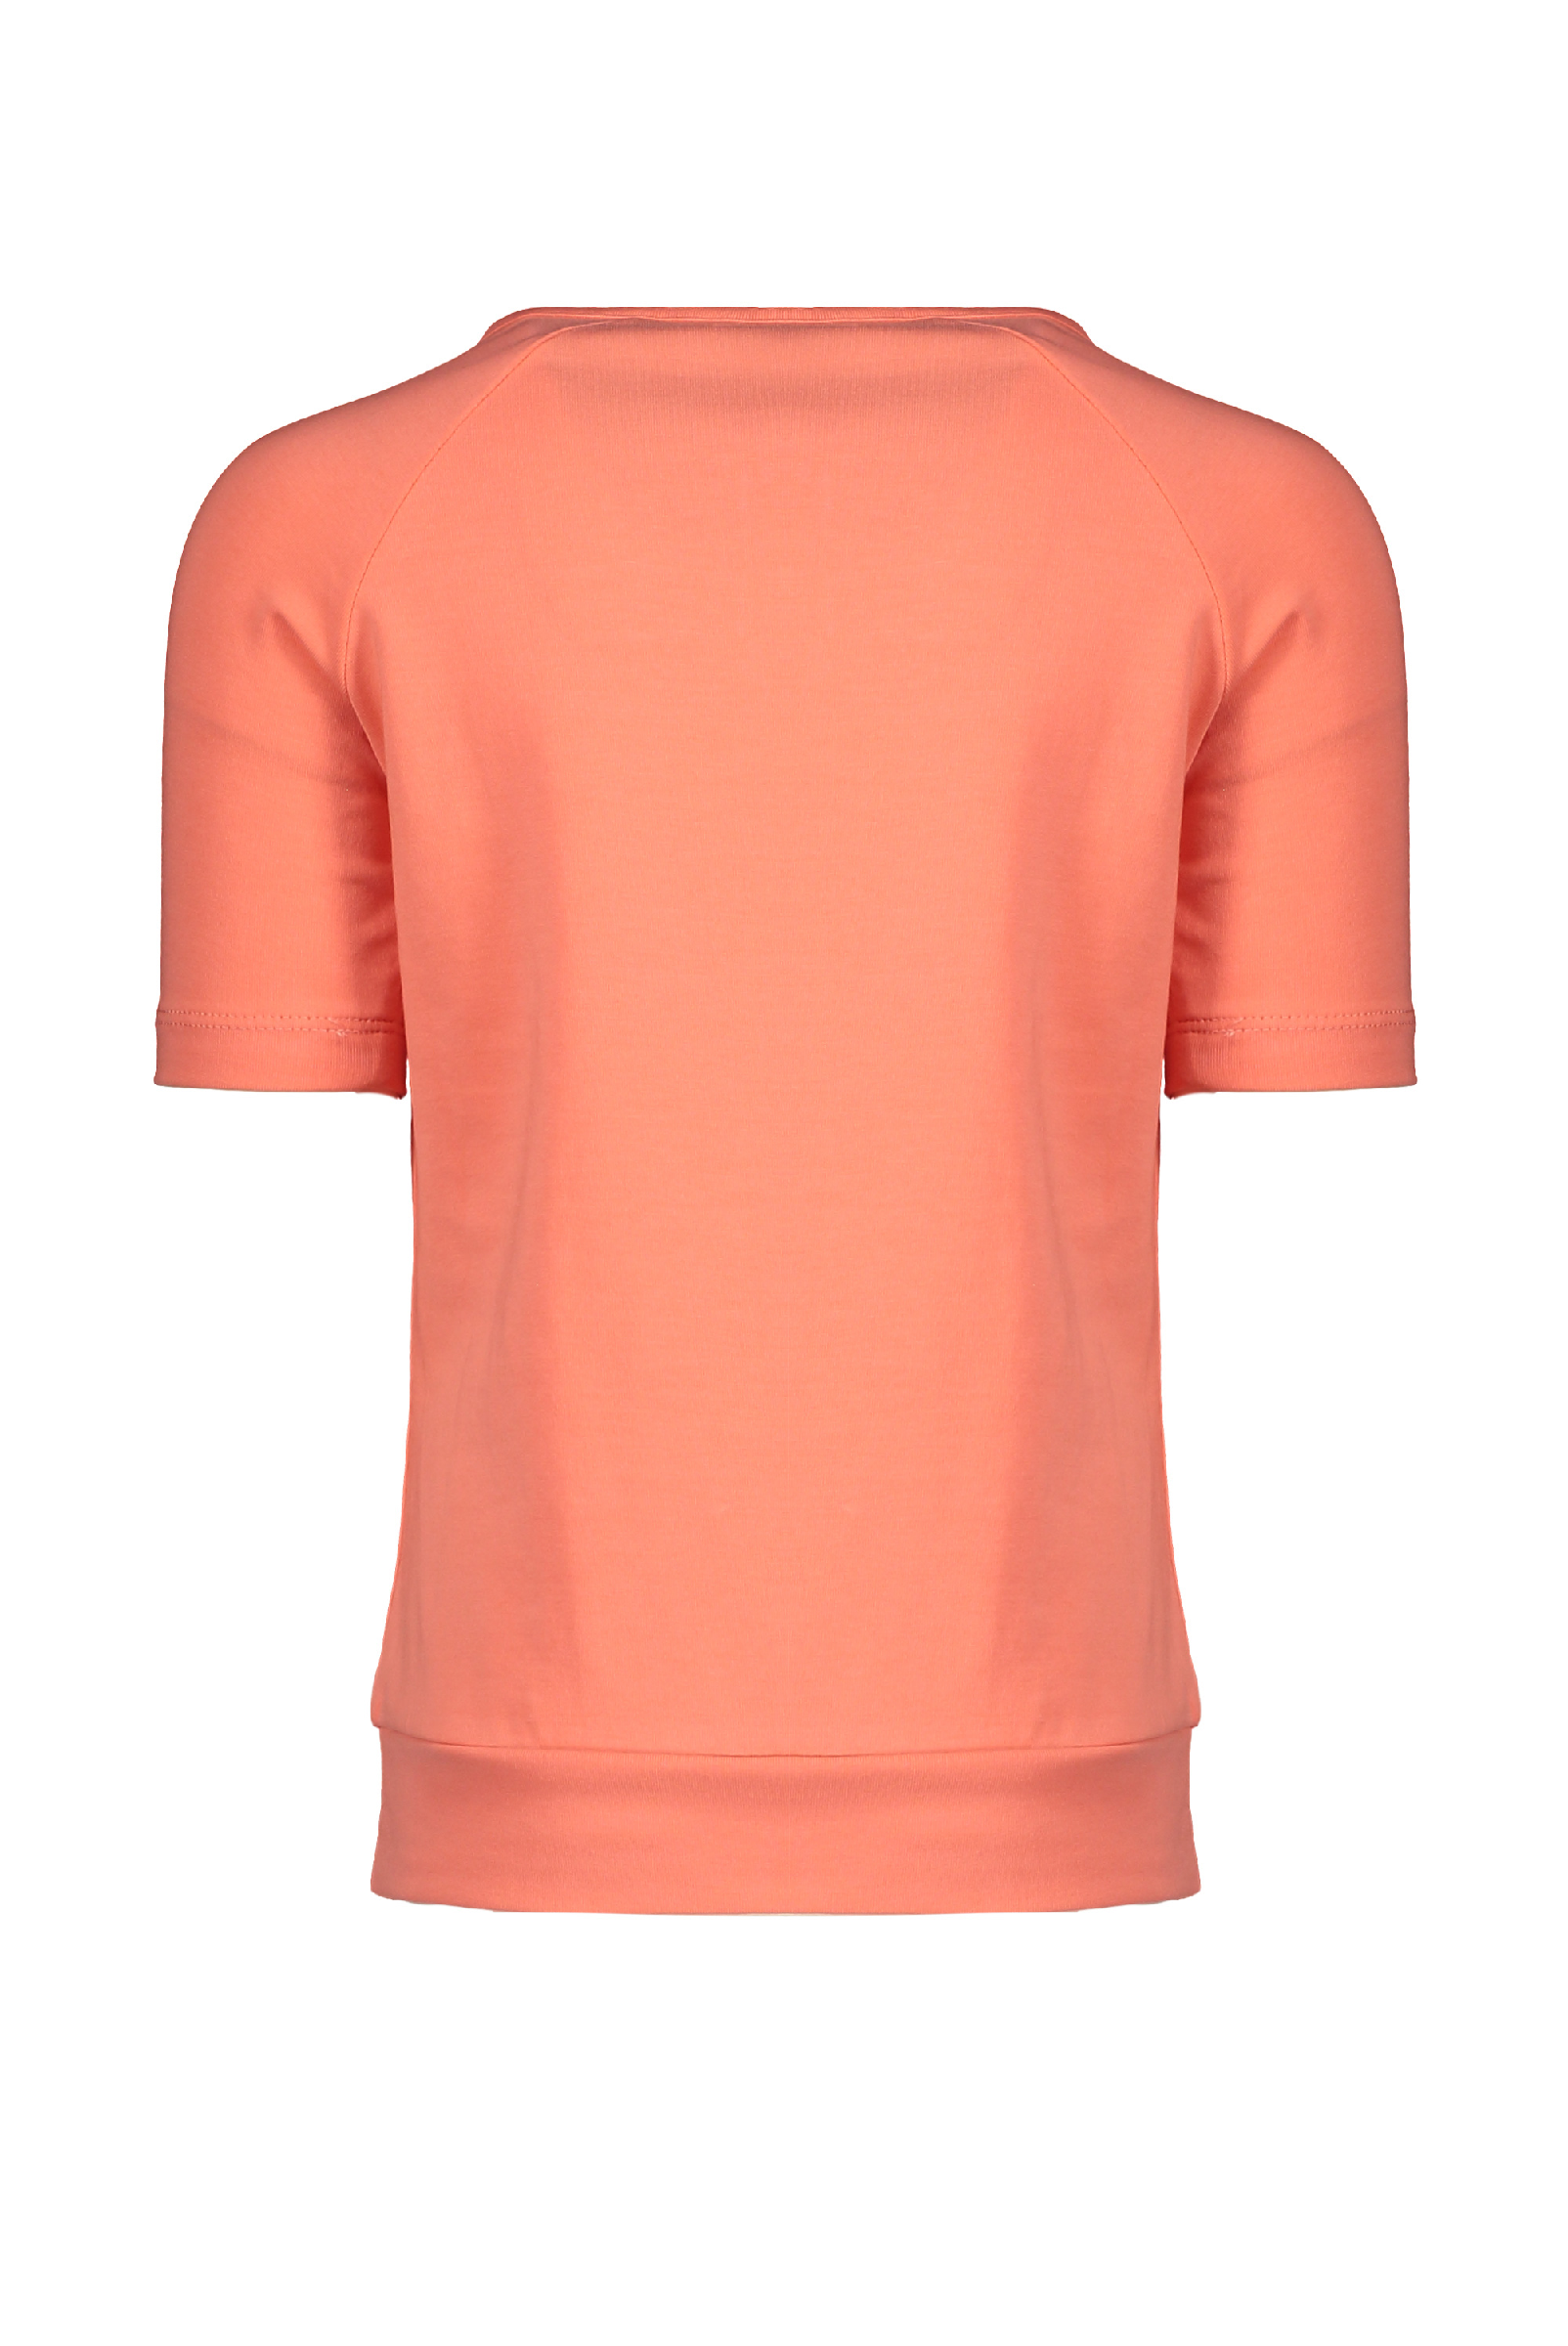 Meisjes Kamou half sleeve/cut-out shirt van NoNo in de kleur Pink Coral in maat 146, 152.